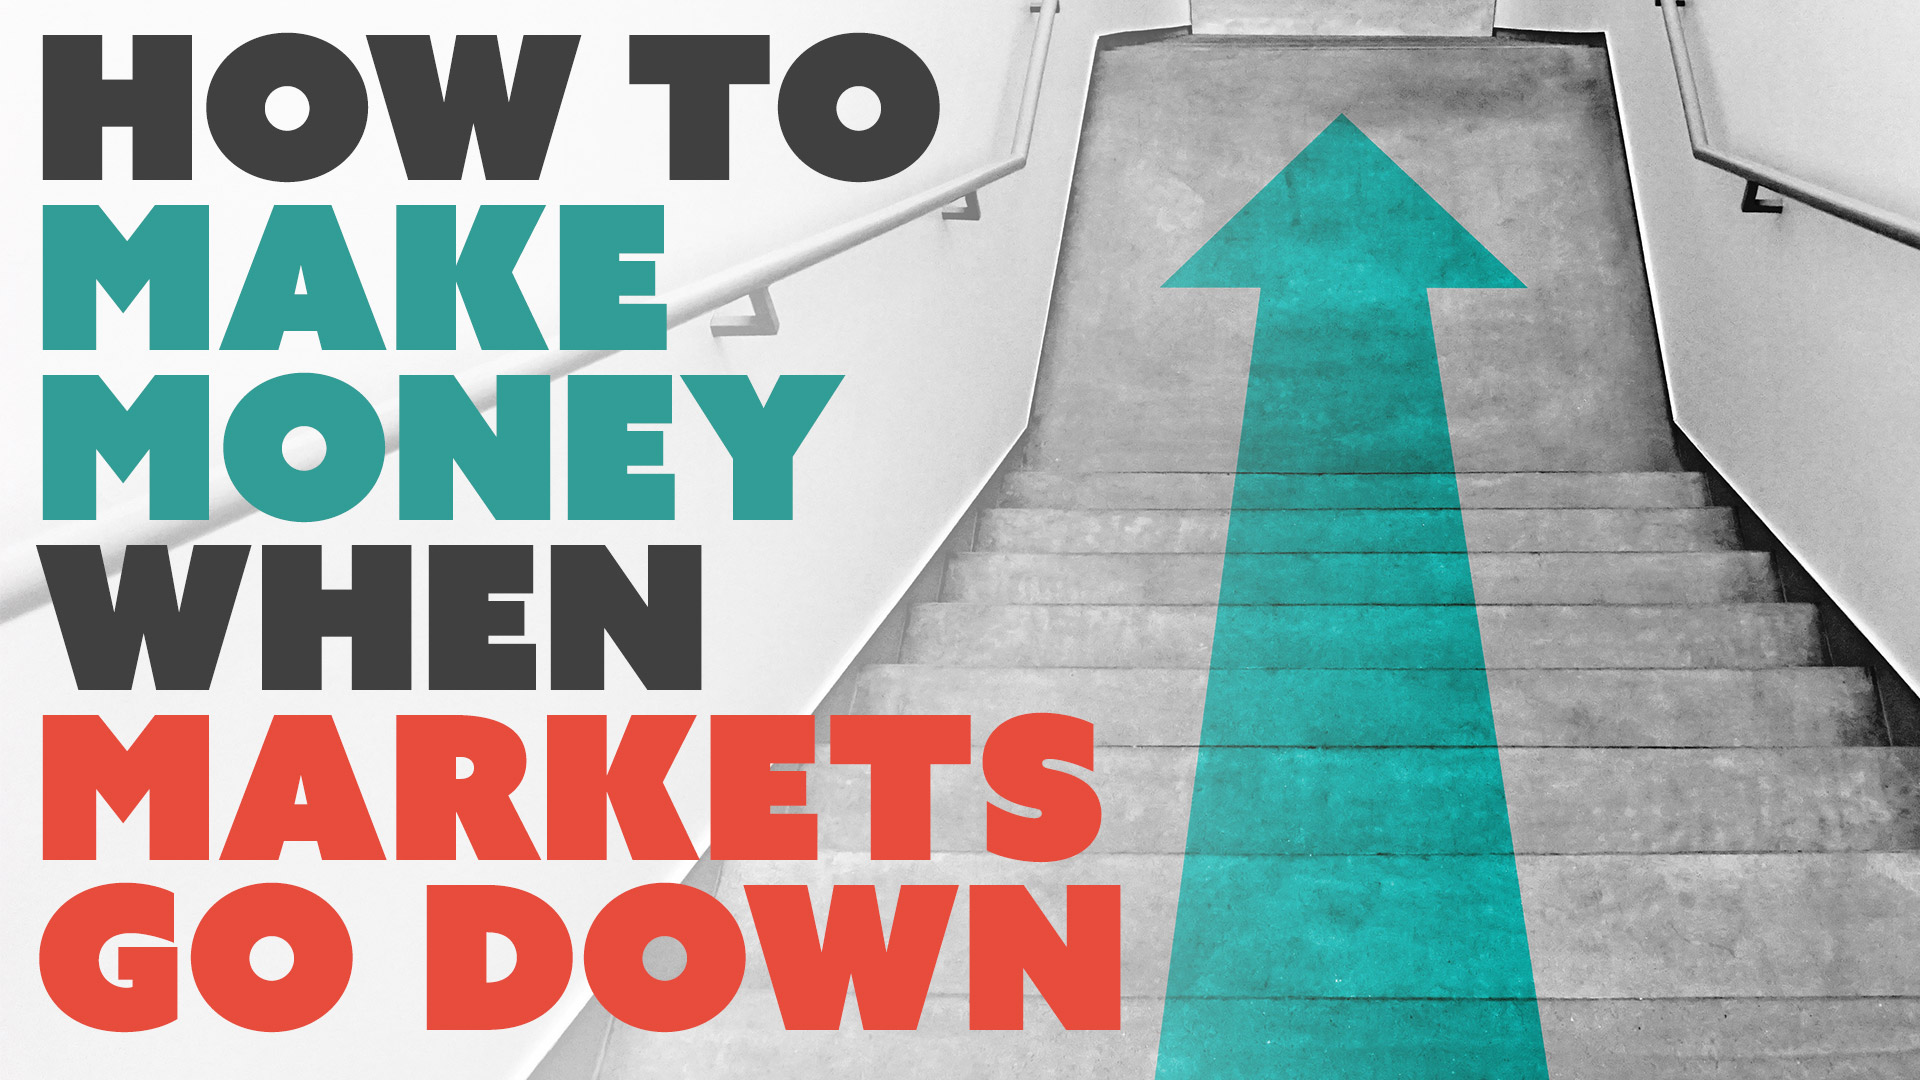 Markets go down. Money go down. Marketing going down. Market go down mem. Down market